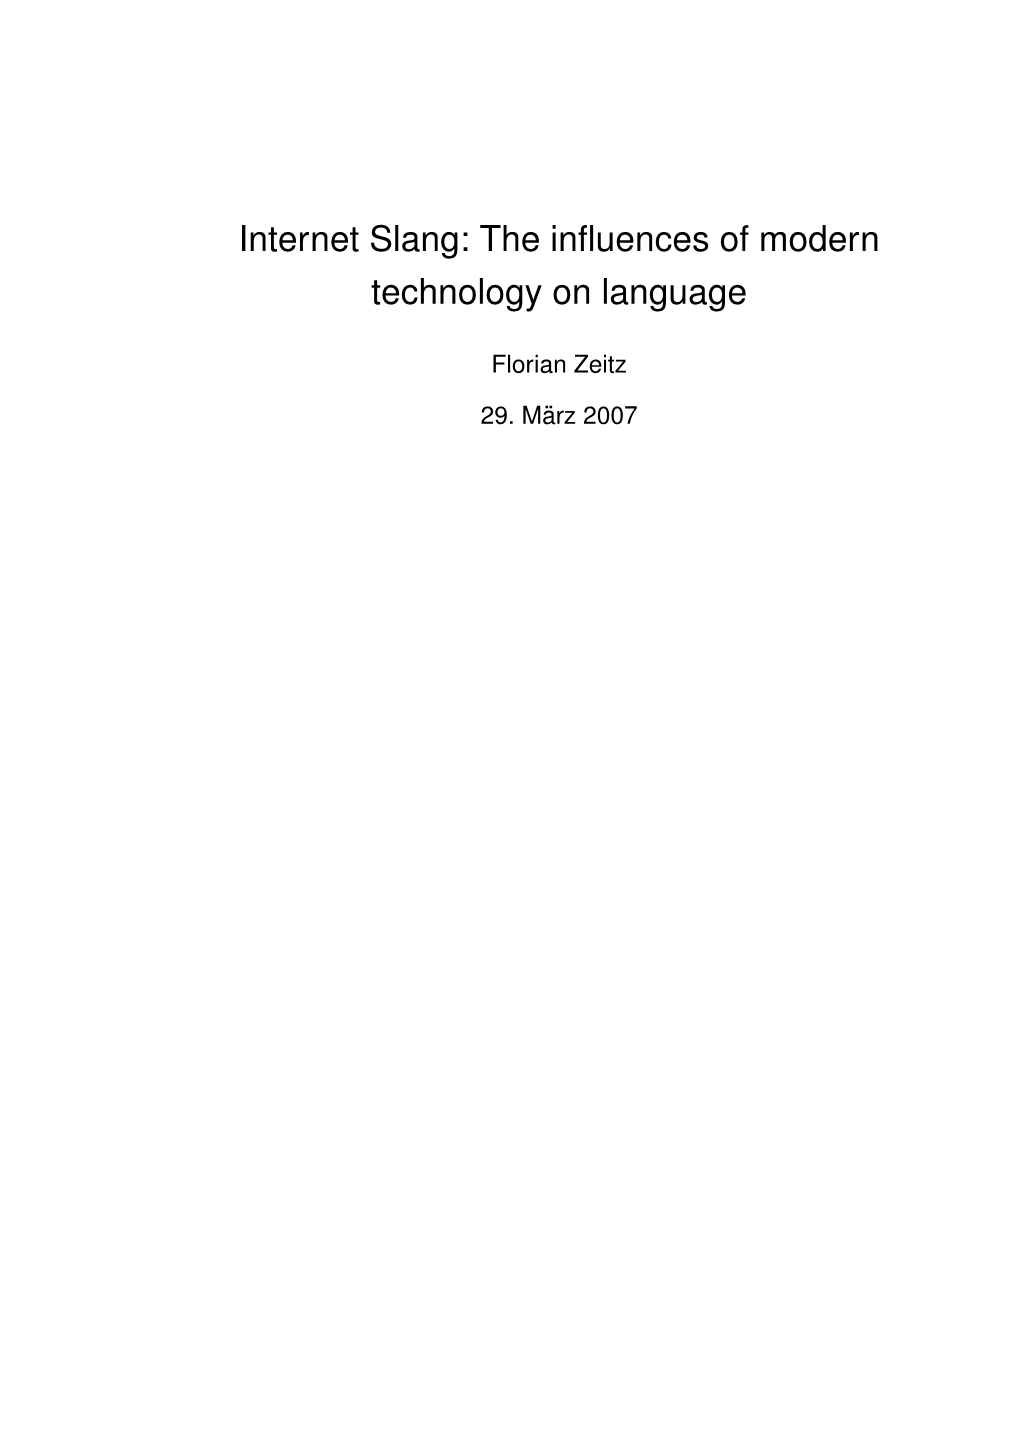 Internet Slang: the Influences of Modern Technology on Language